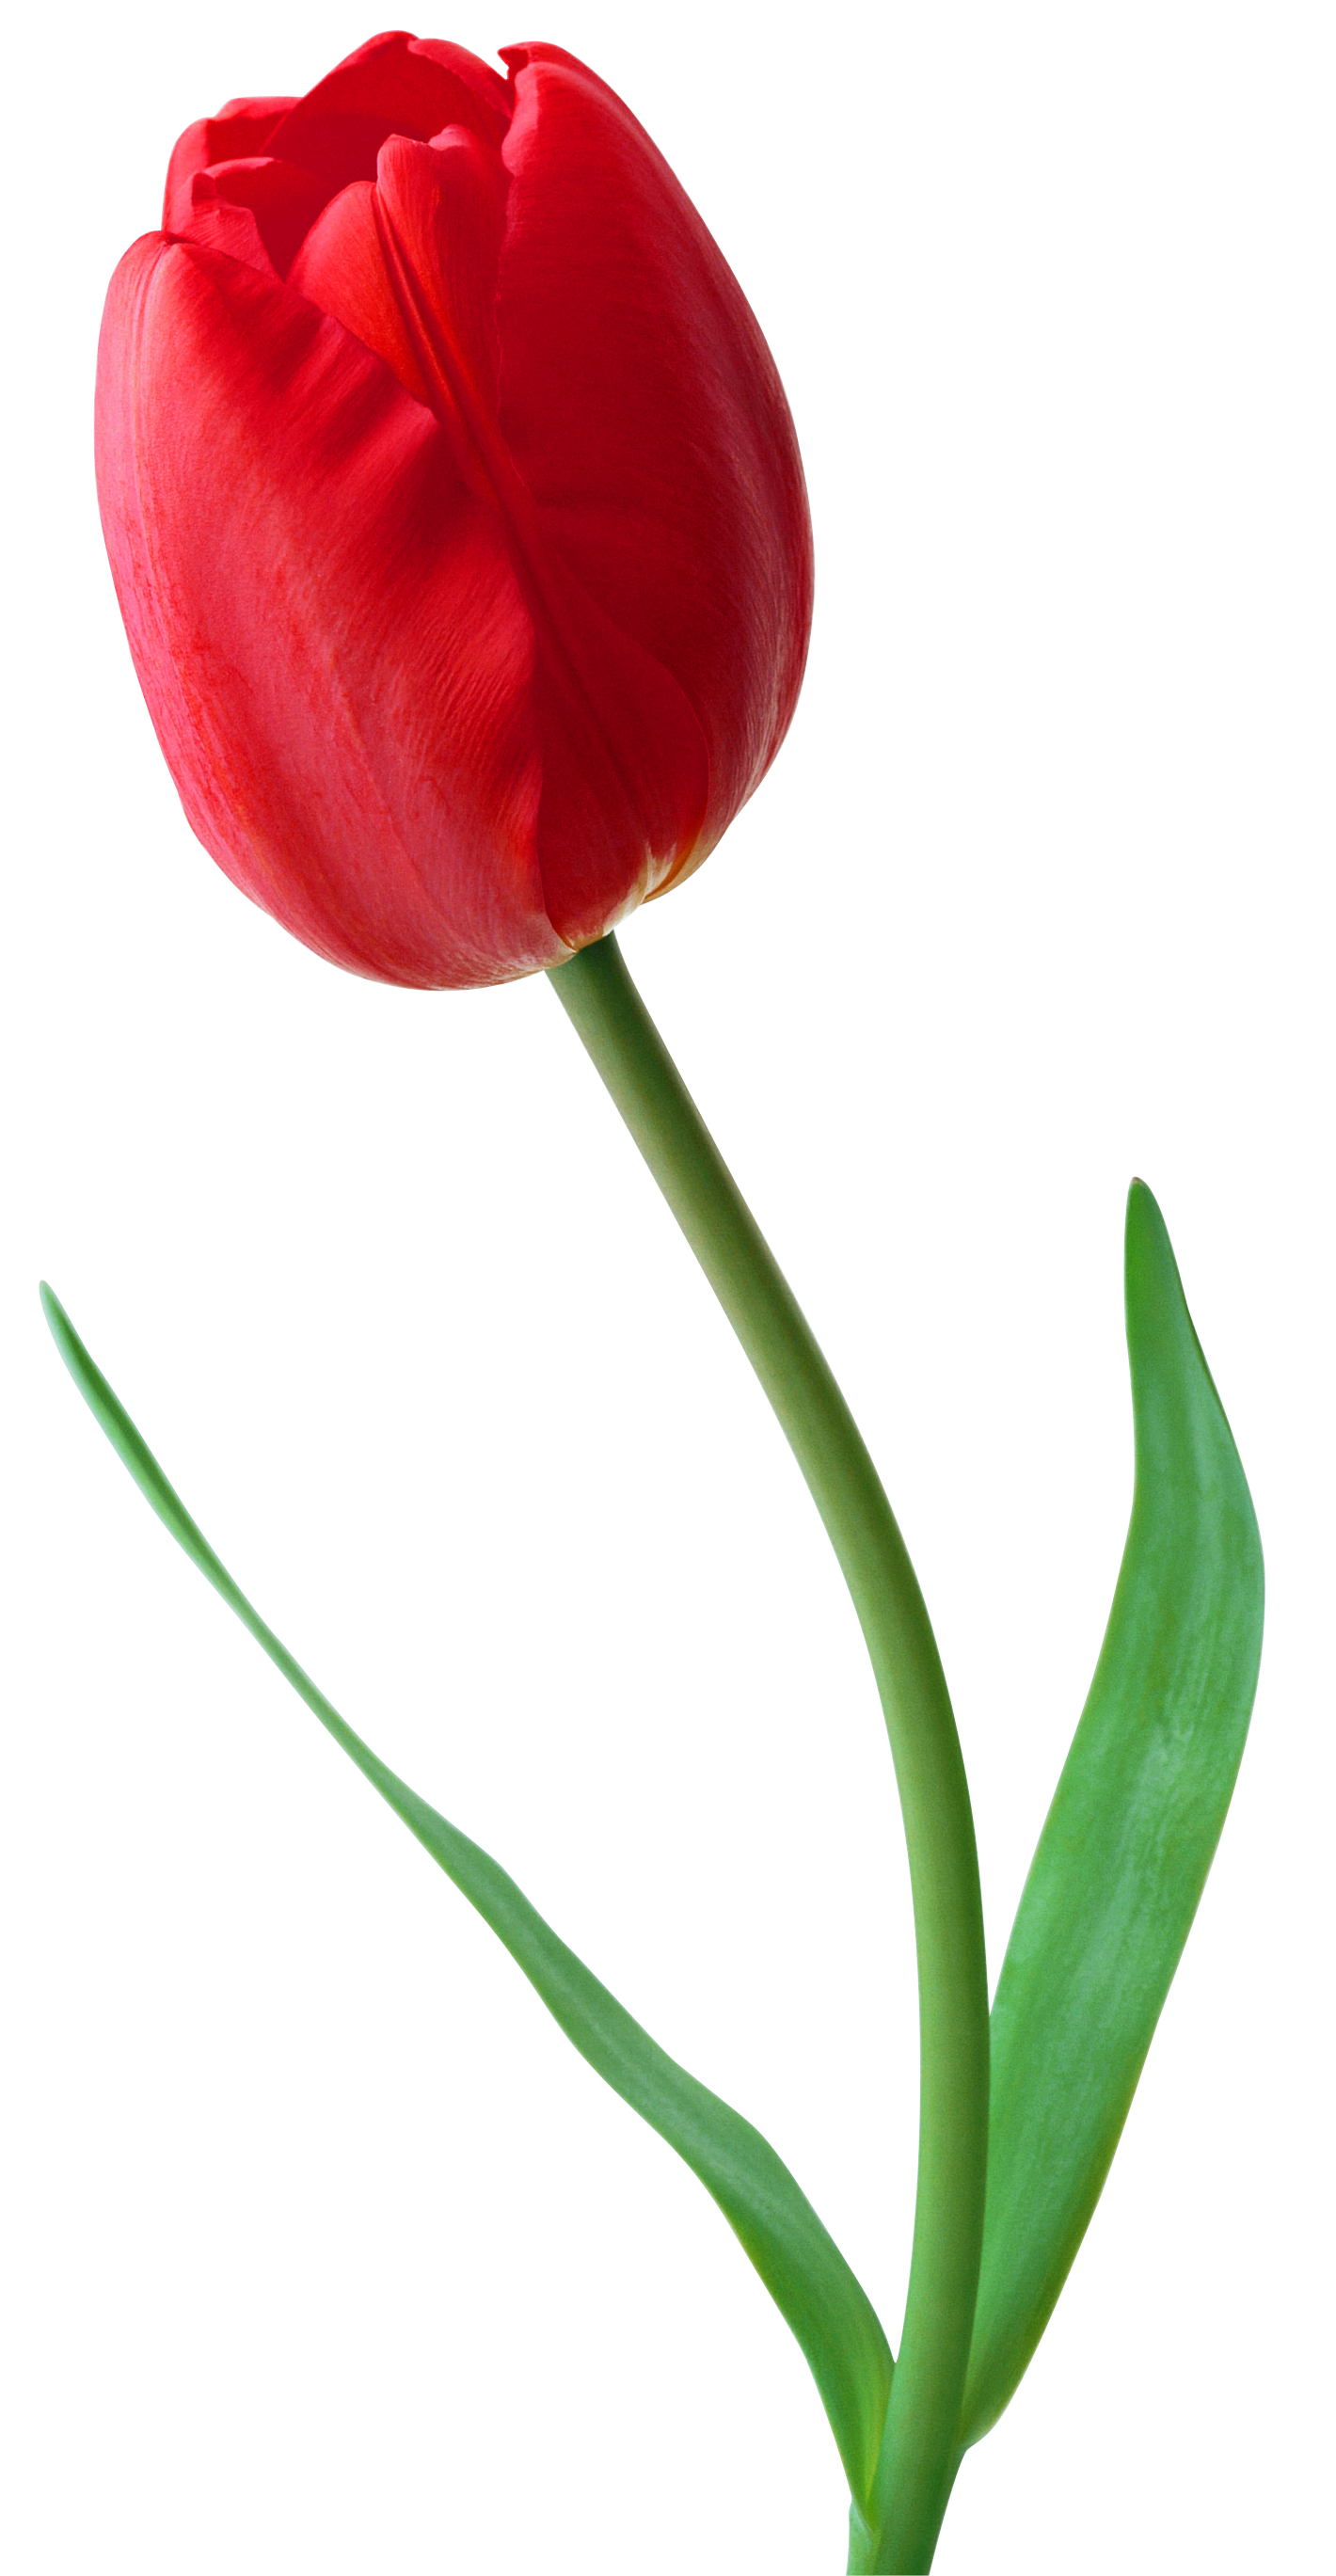 Yellow tulip PNG image